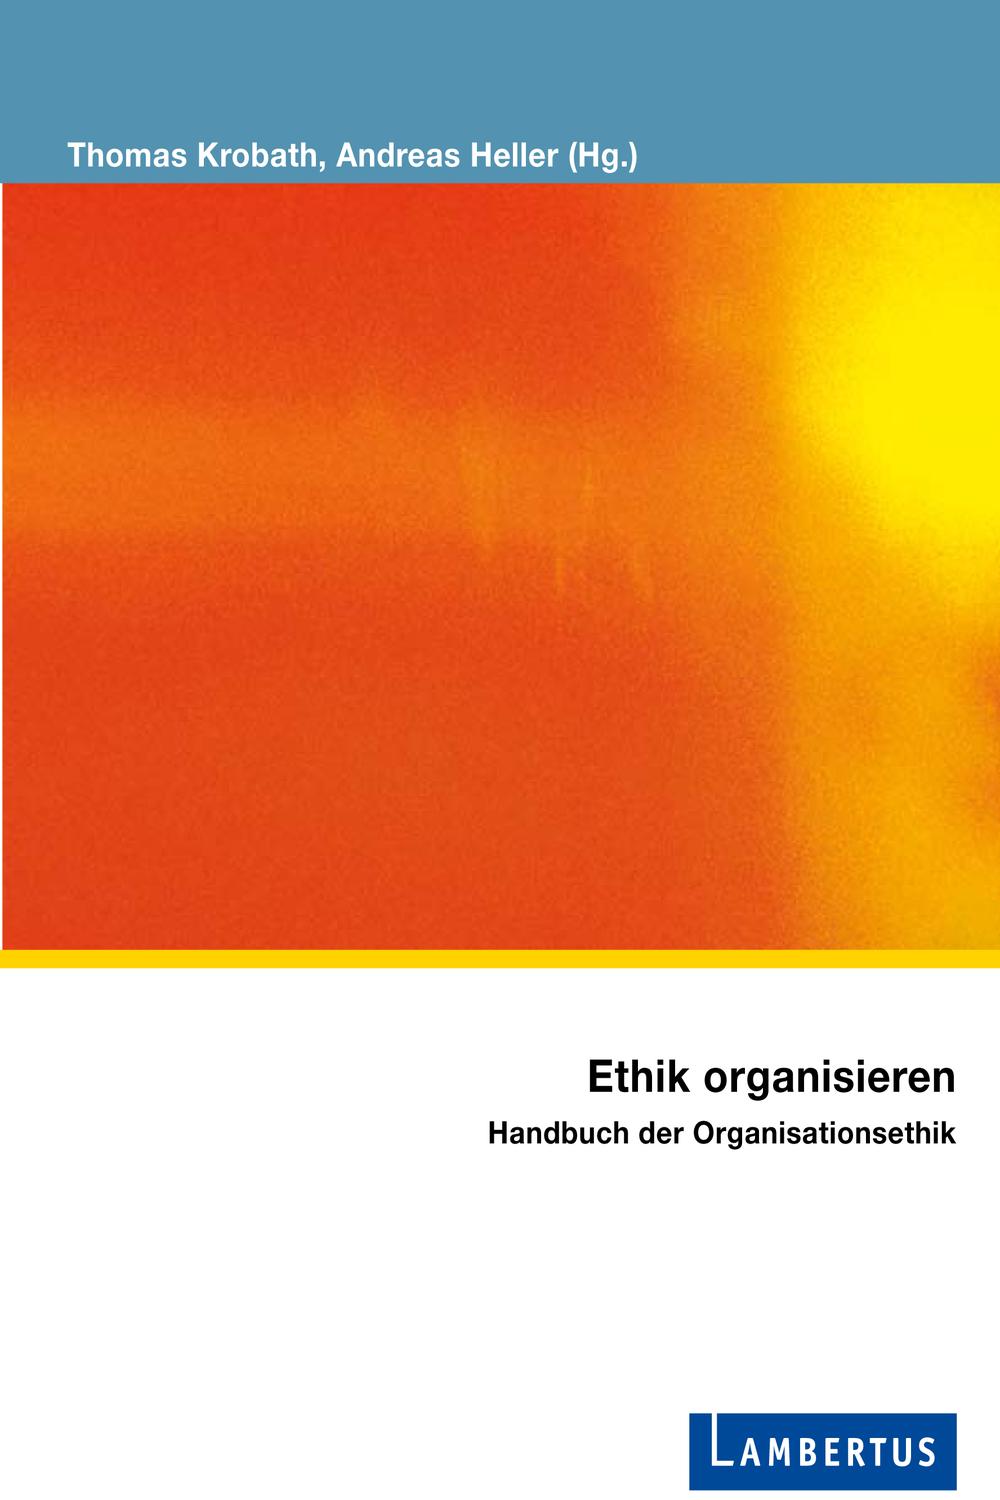 Ethik organisieren - Thomas Krobath, Andreas Heller